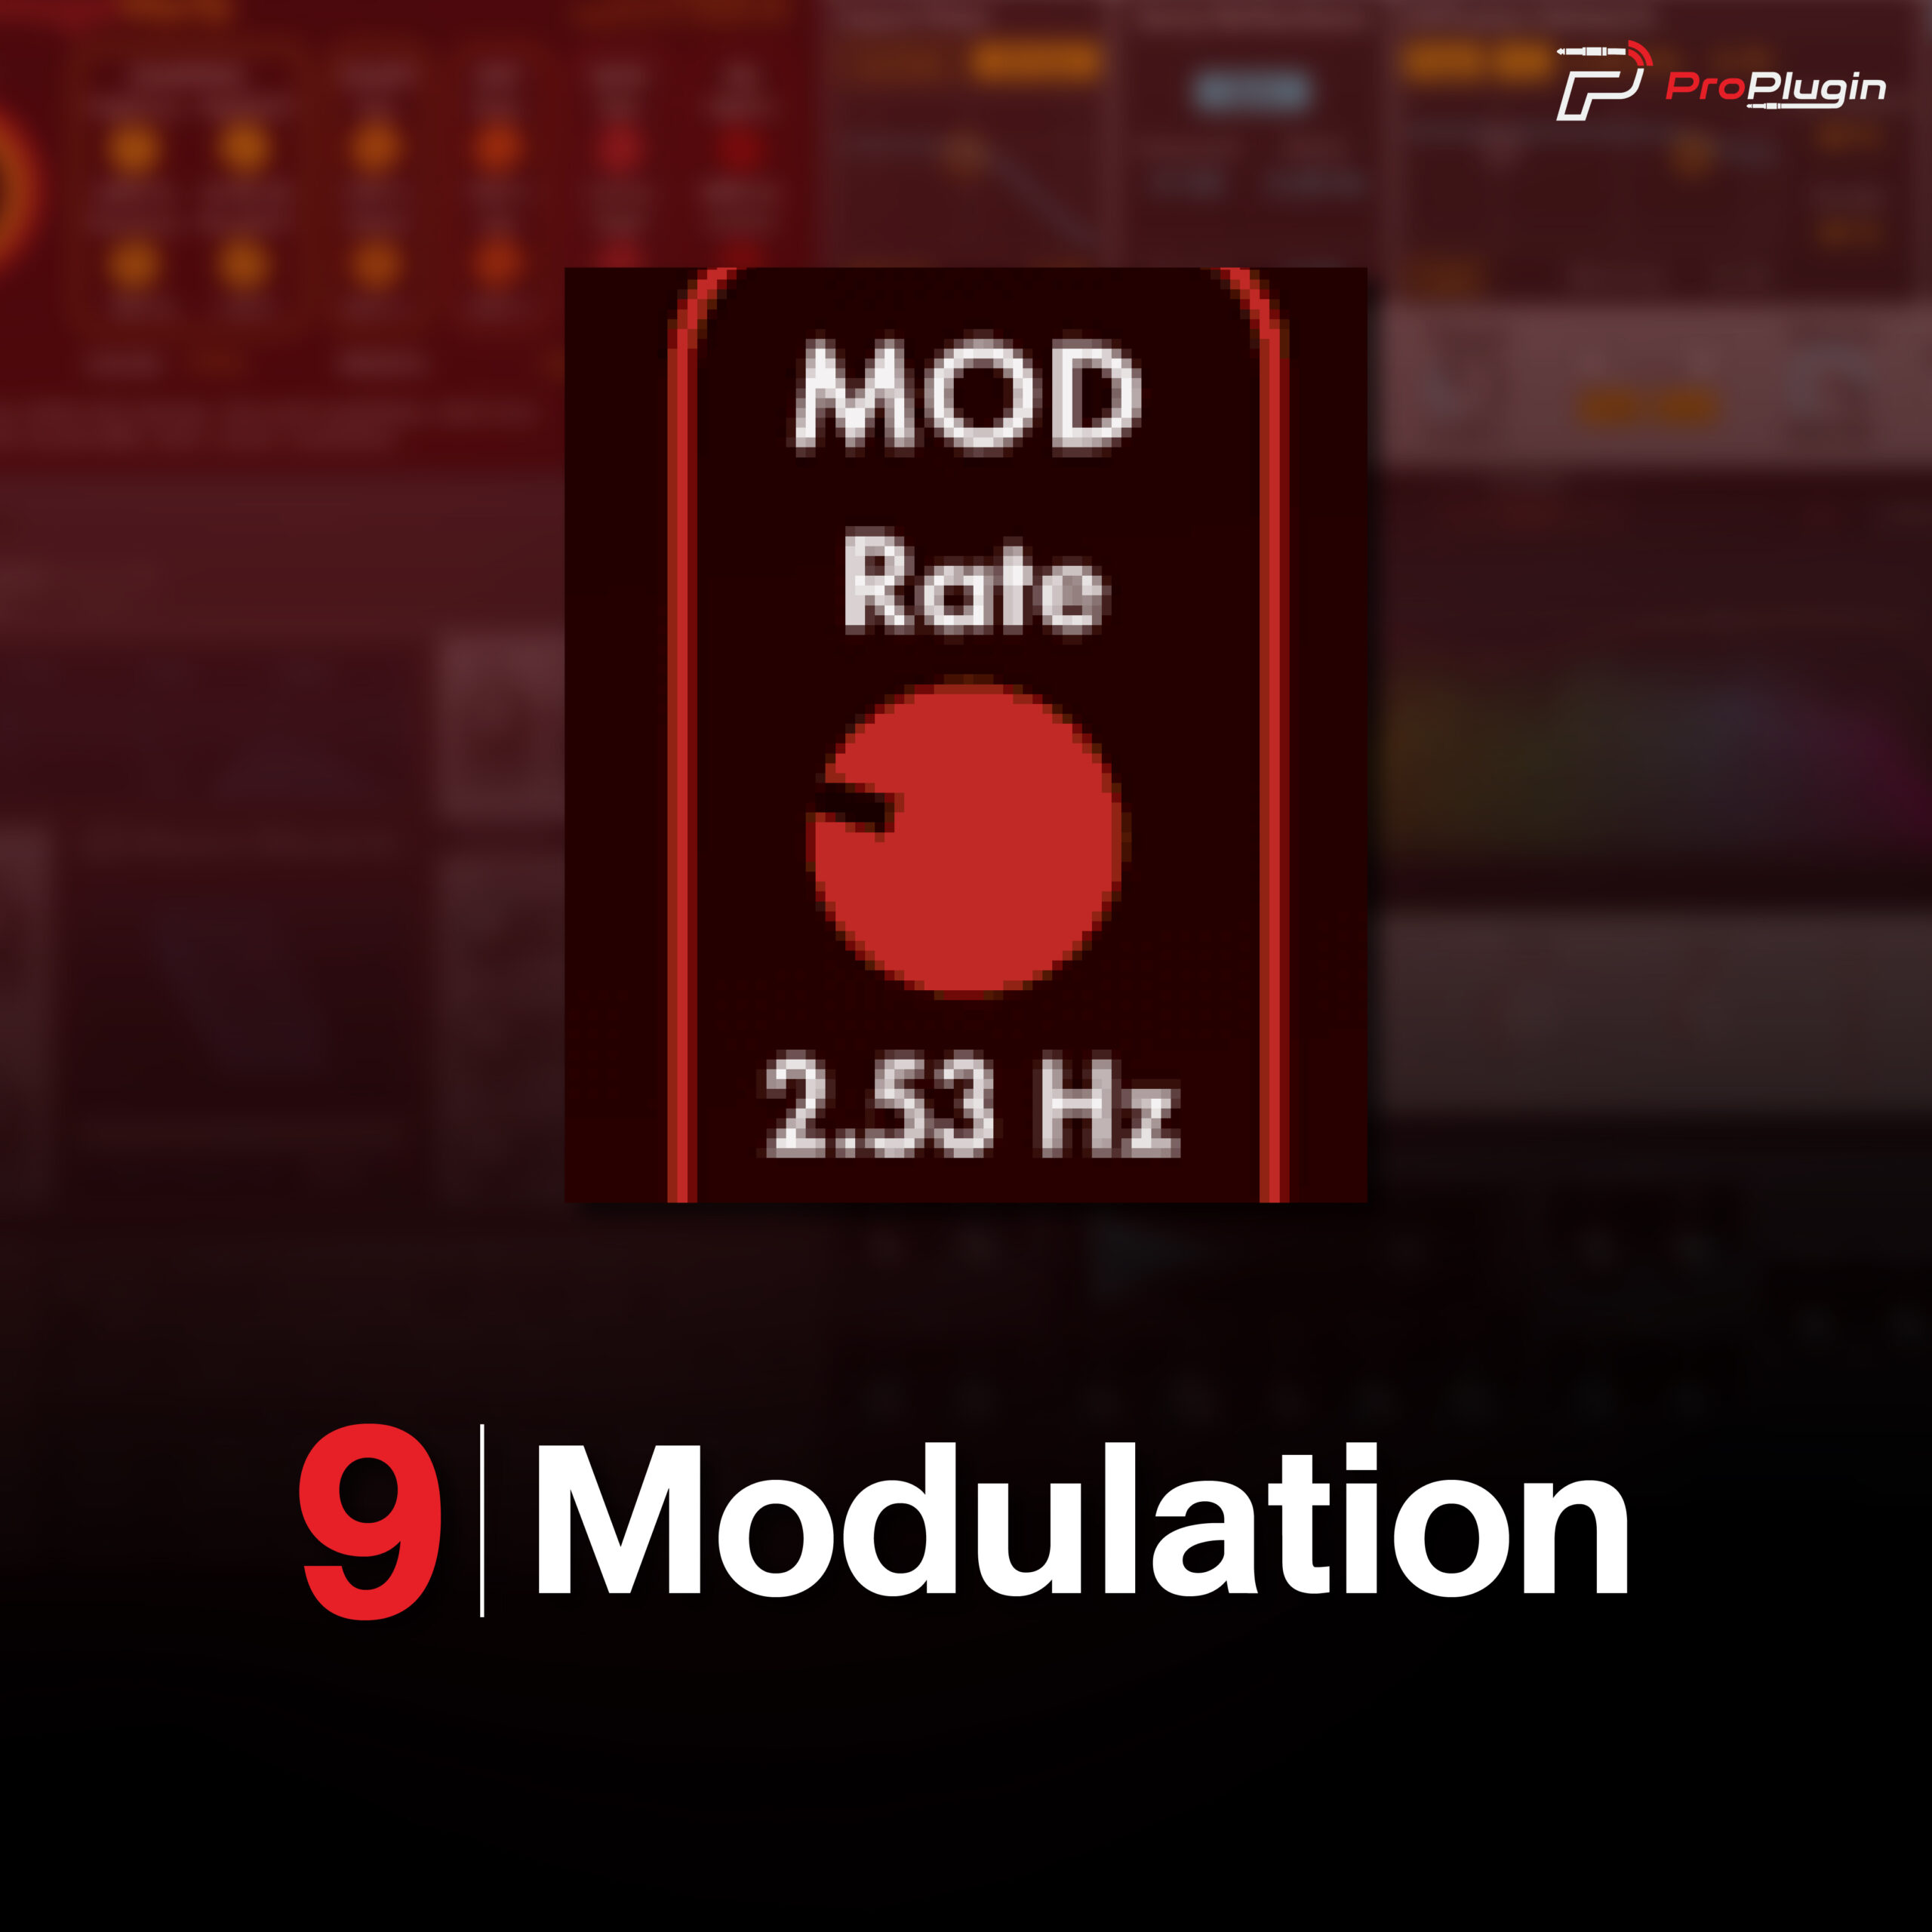 9.Modulation